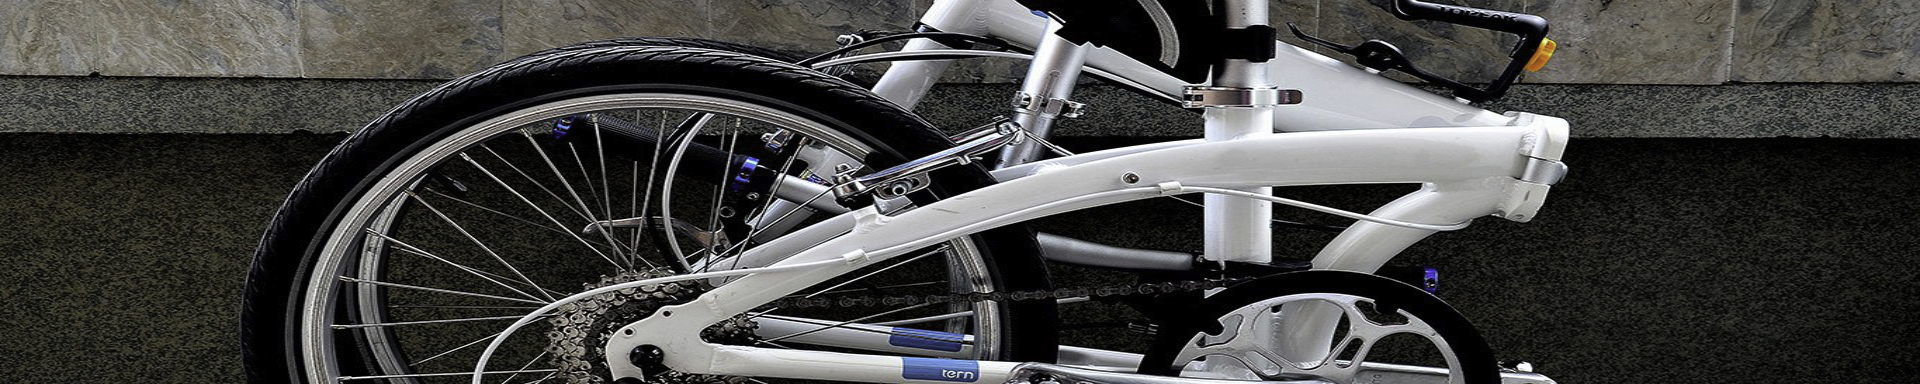 Folding Bikes | GarageAndFab.com | Munro Industries gf-10010304030205